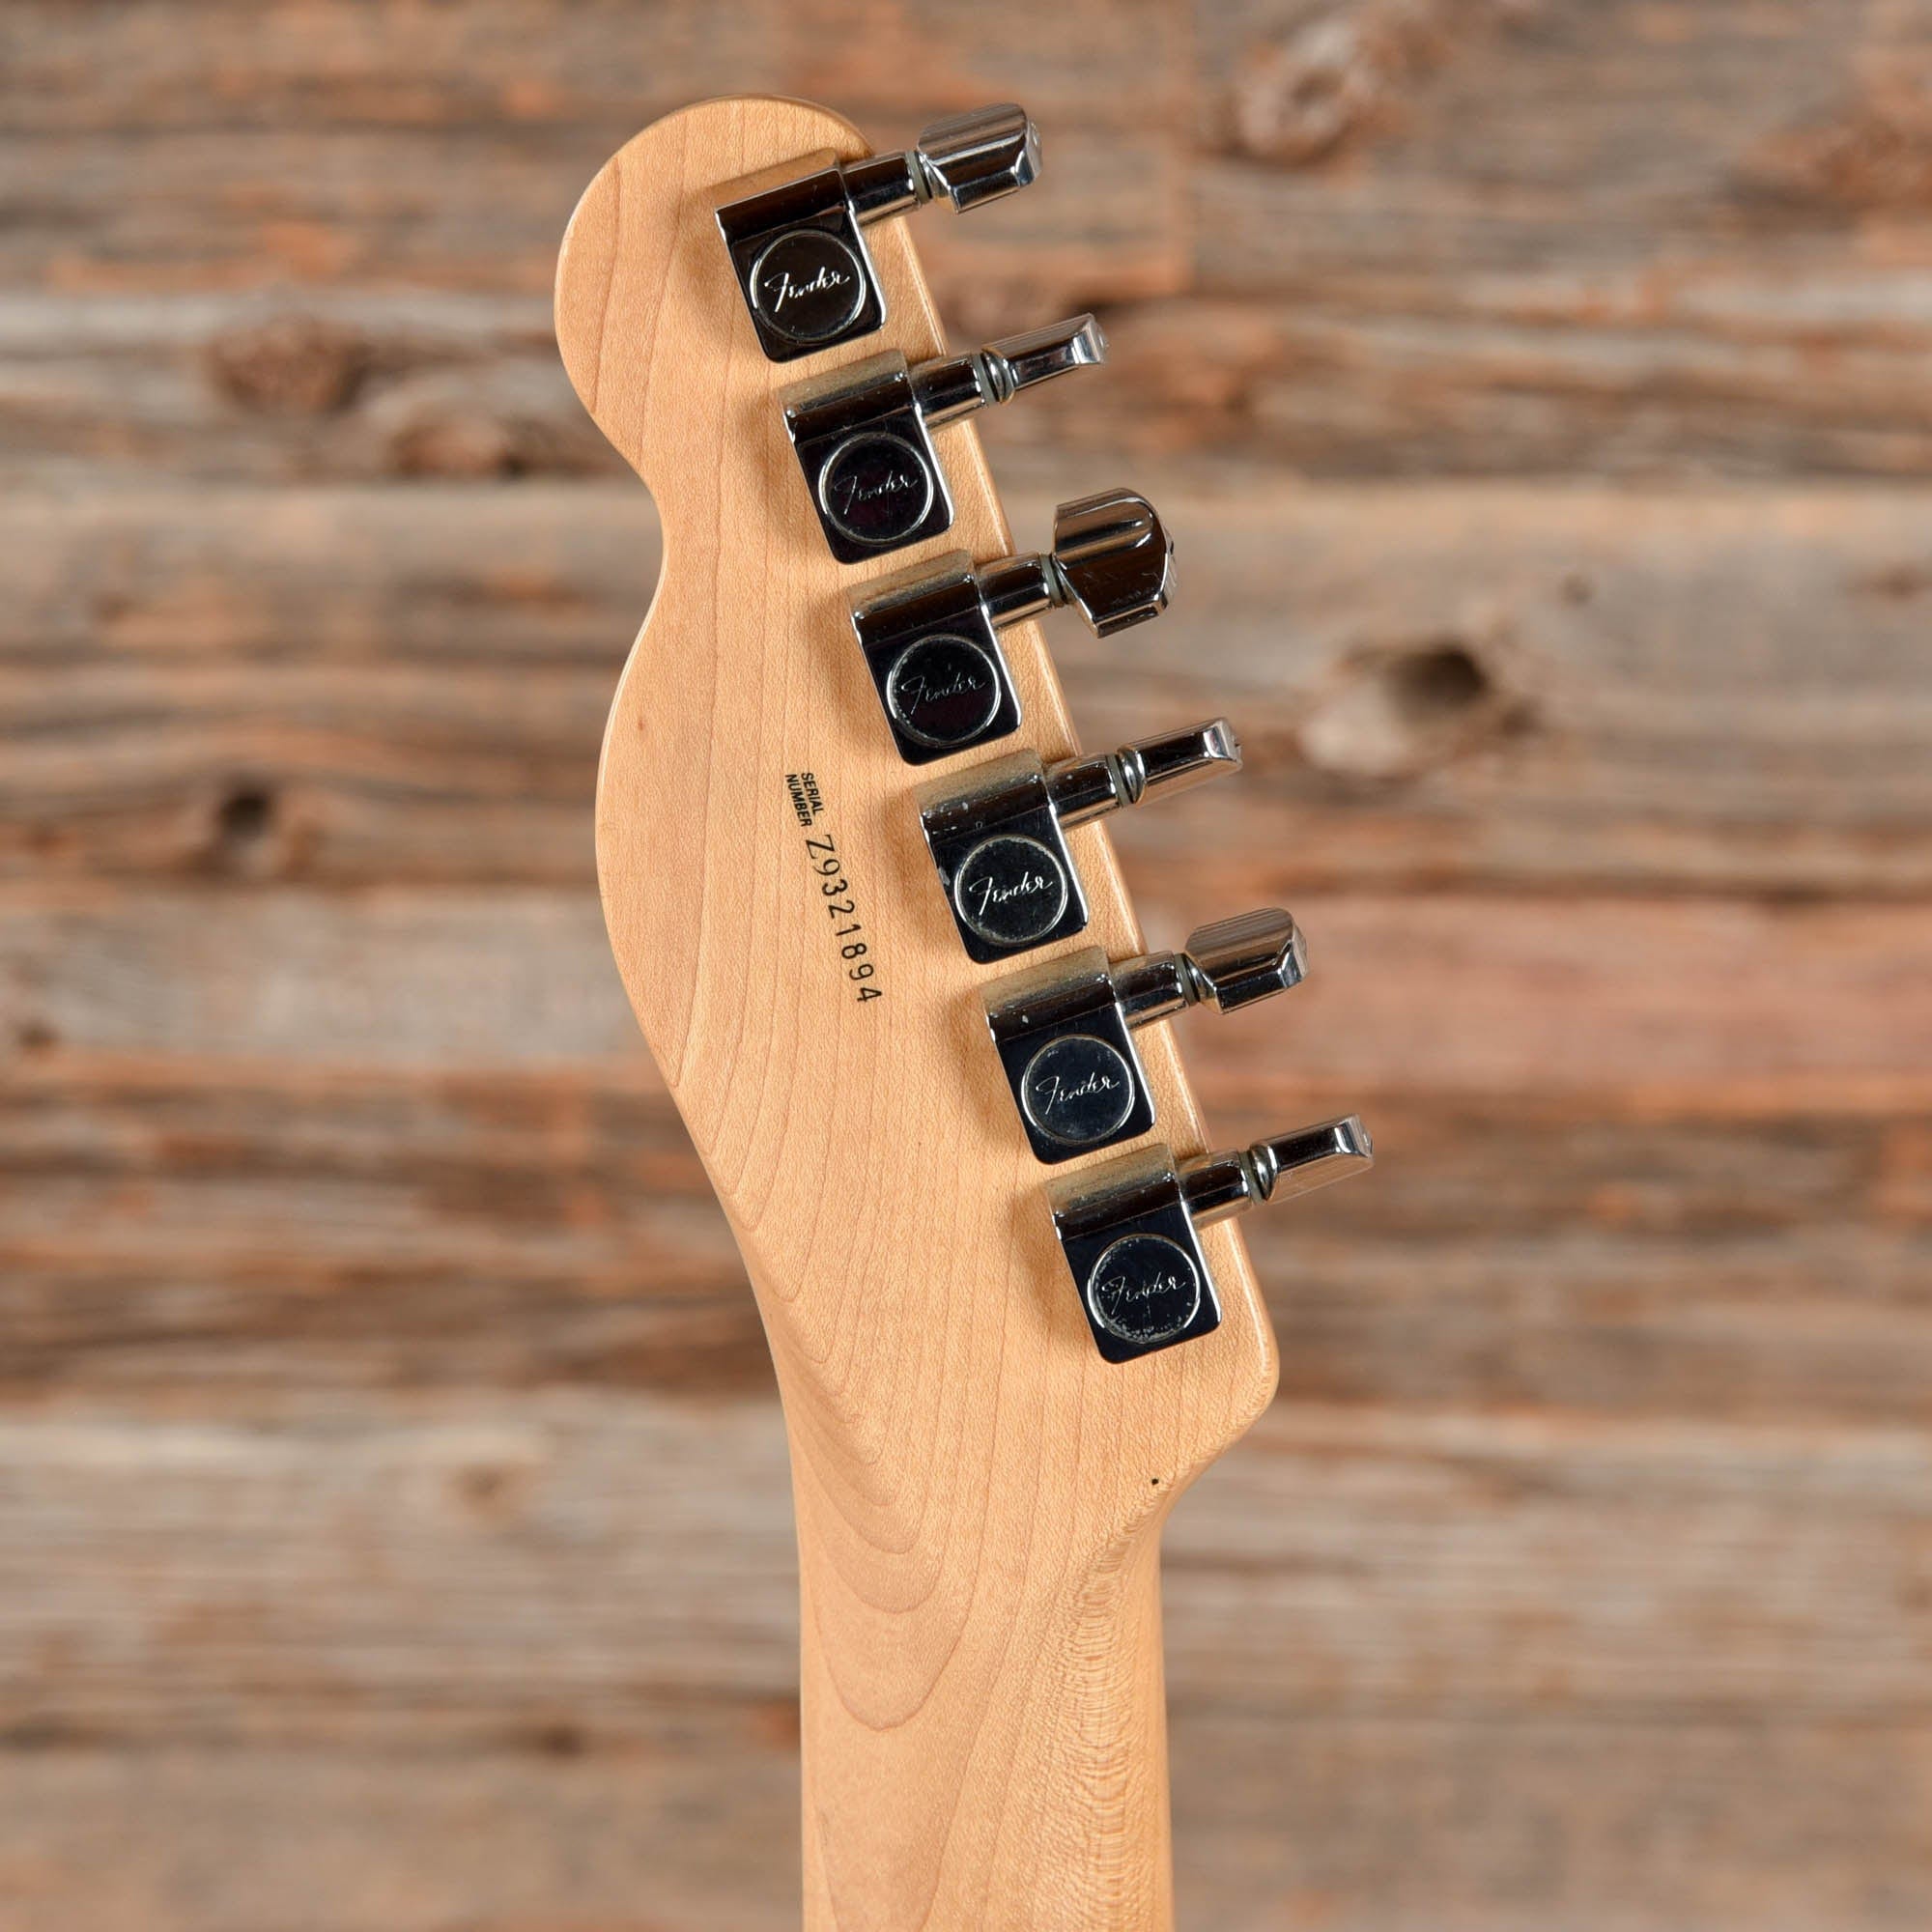 Fender American Standard Telecaster Black 2009 Electric Guitars / Solid Body